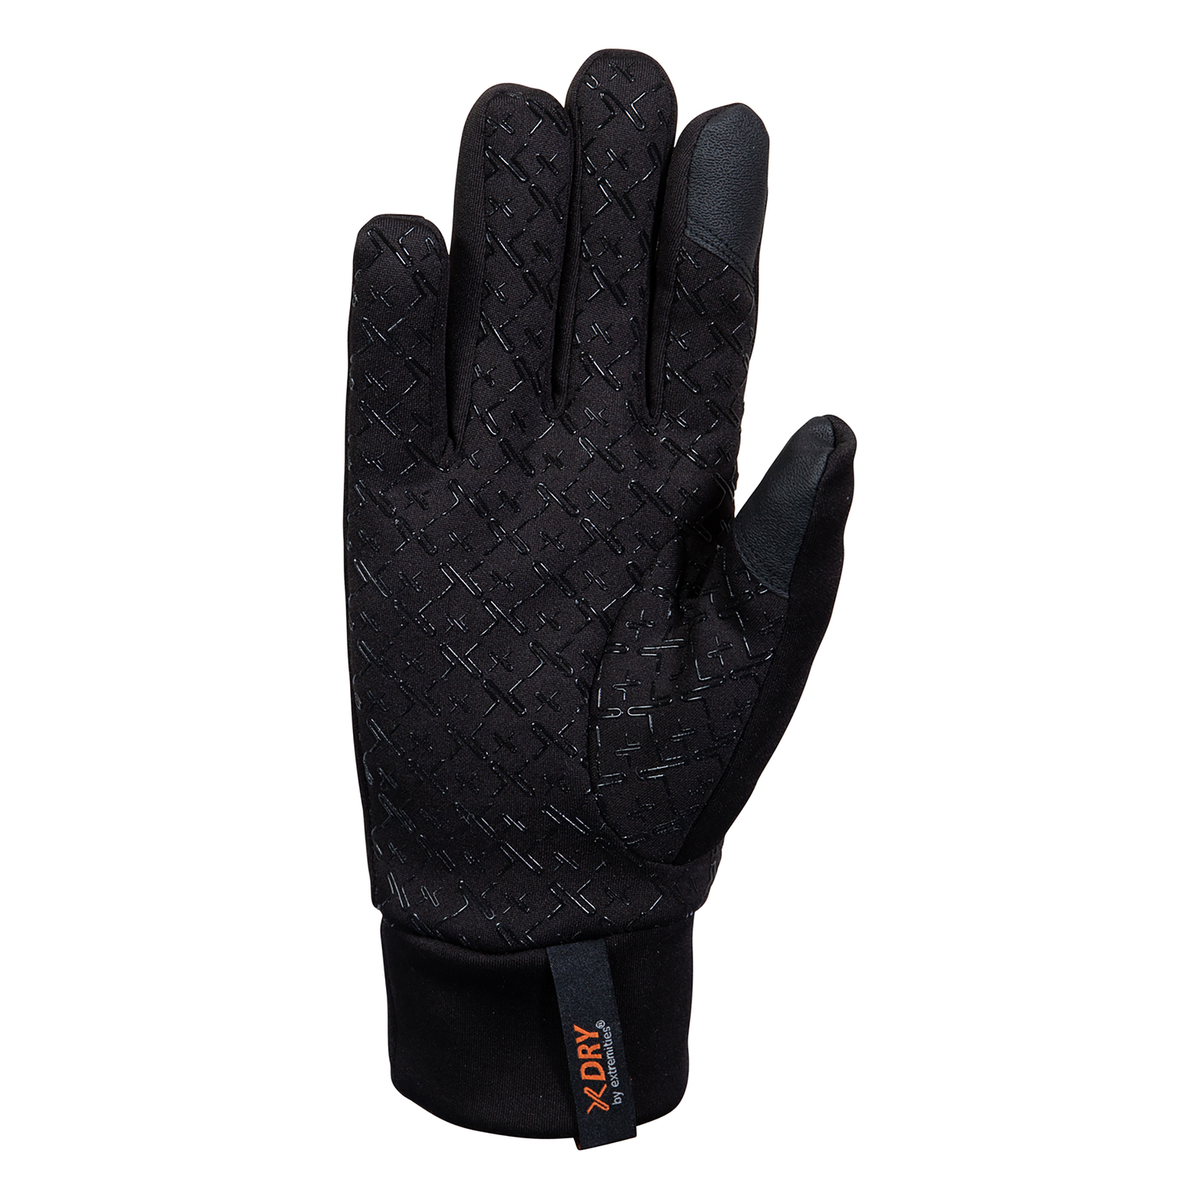 Extremities Sticky Waterproof Power Liner Glove - Black